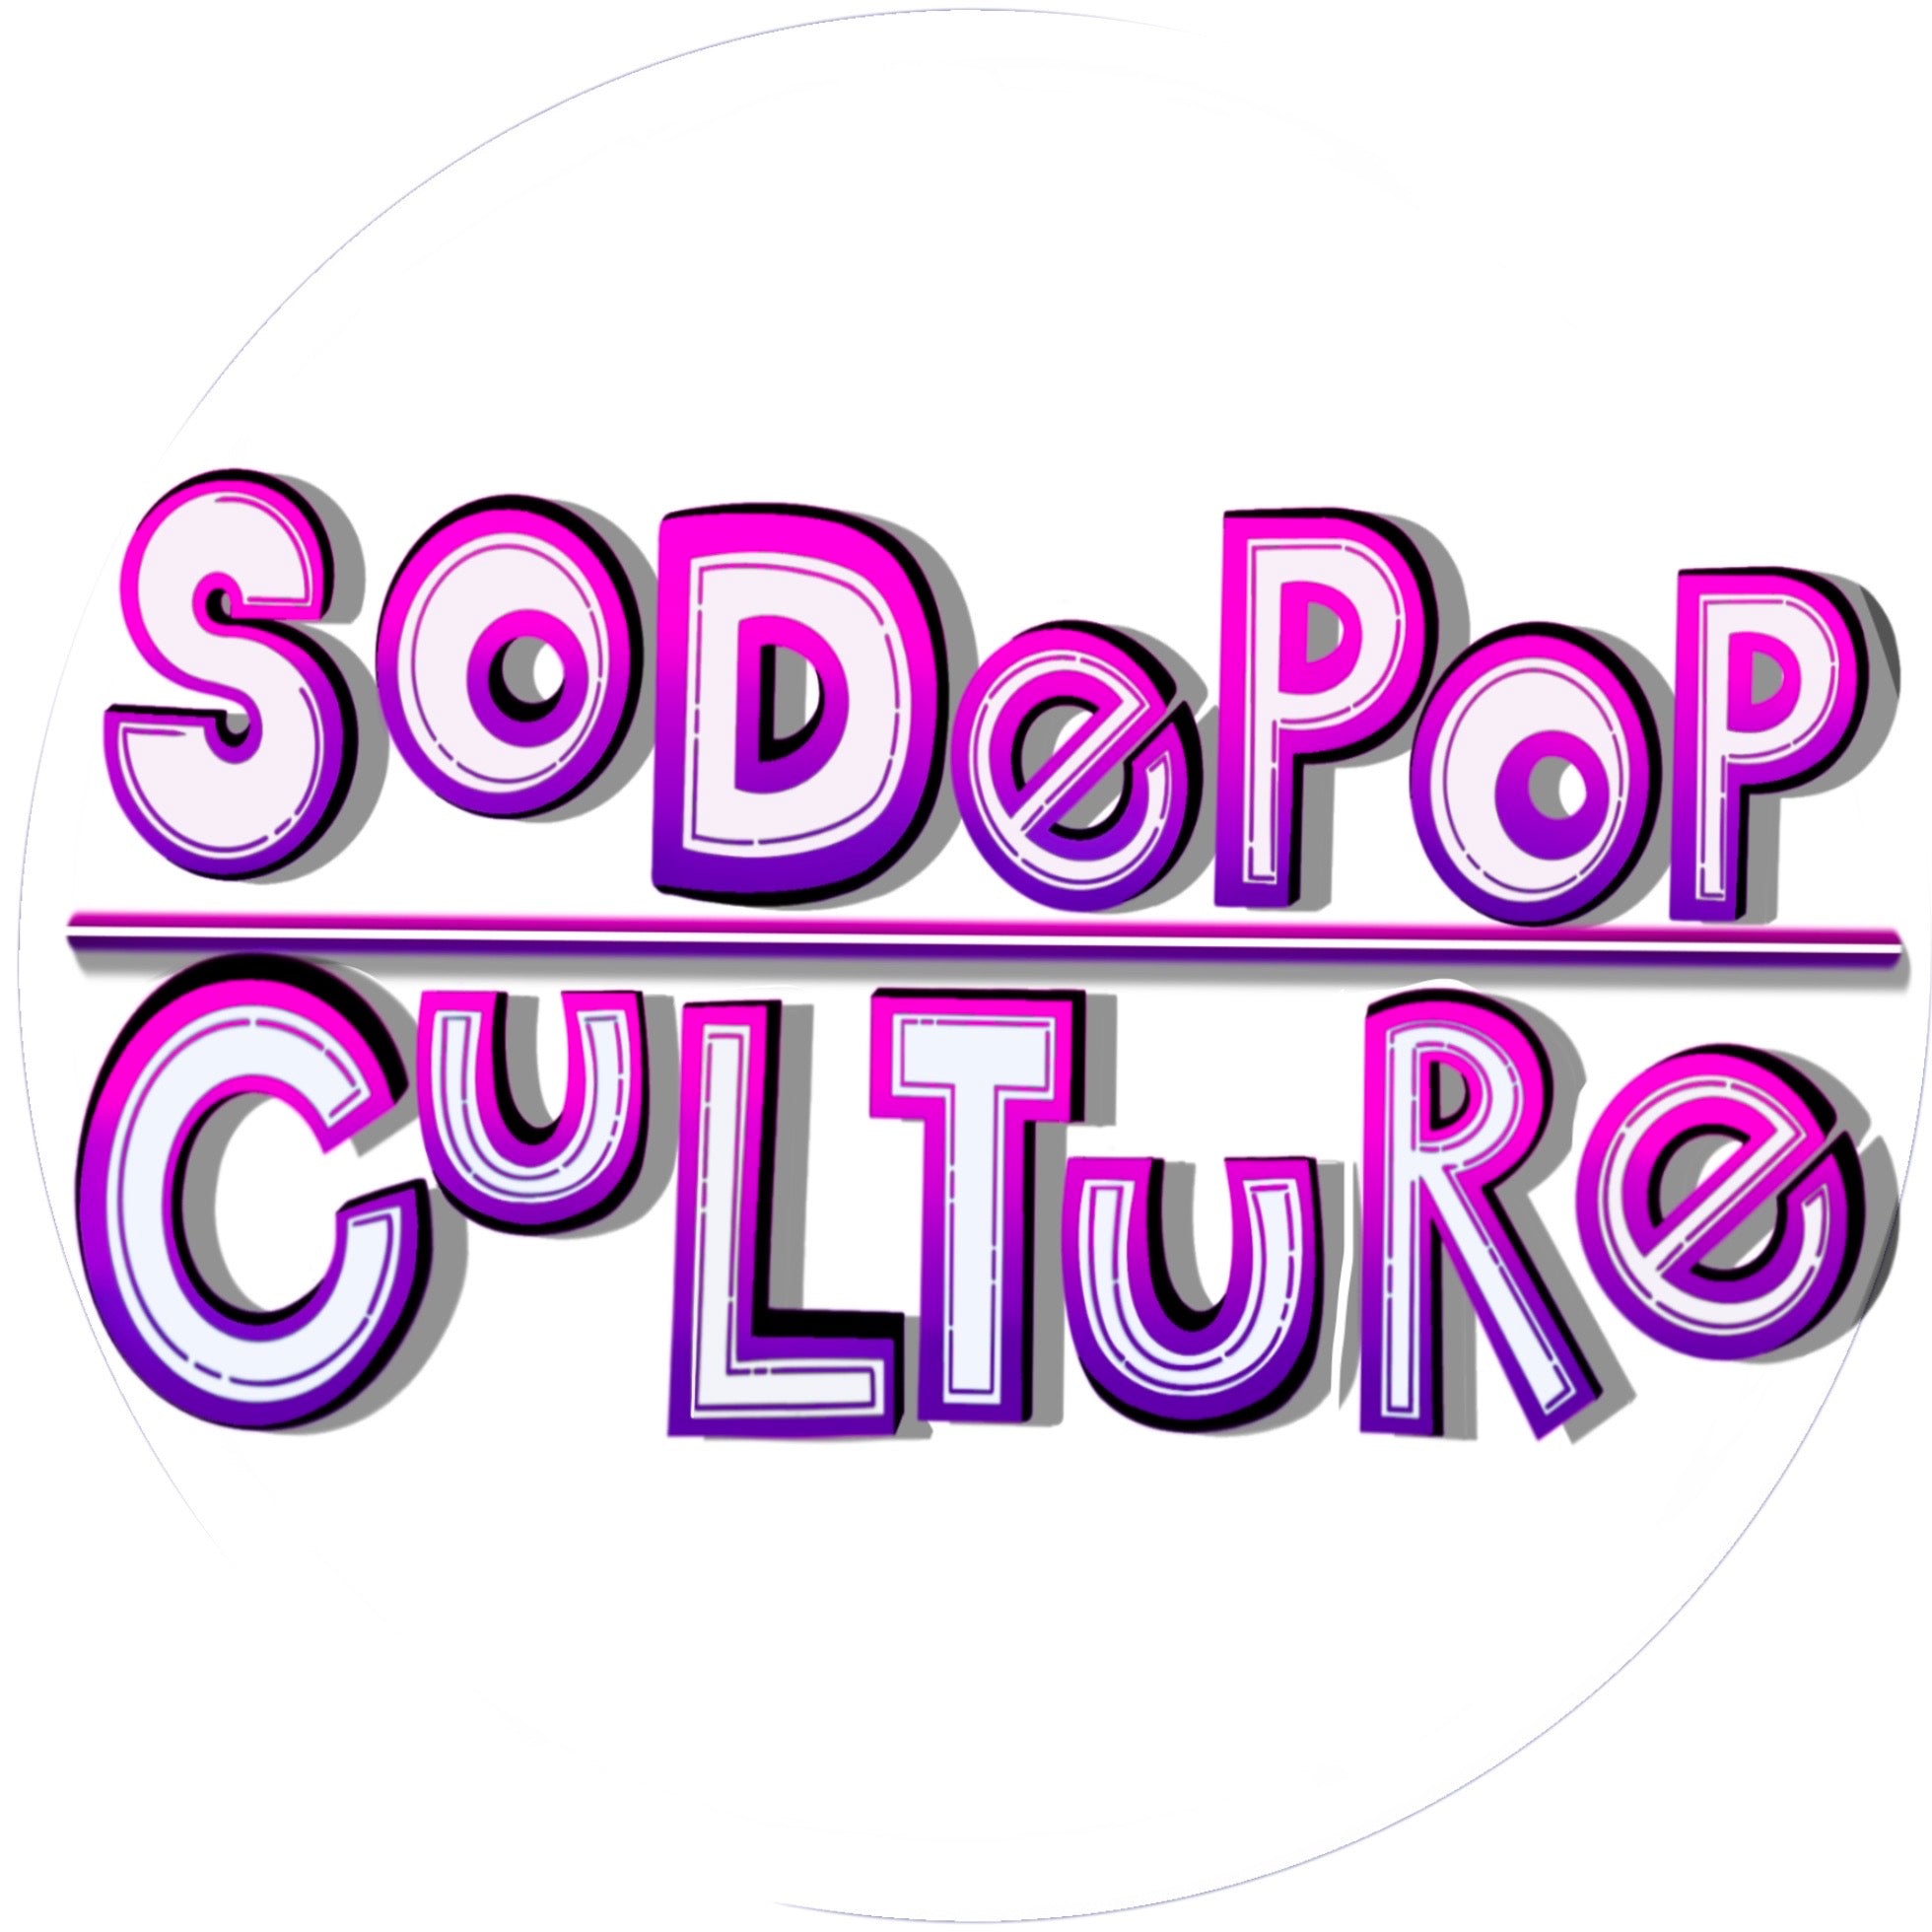 SoDePop Culture